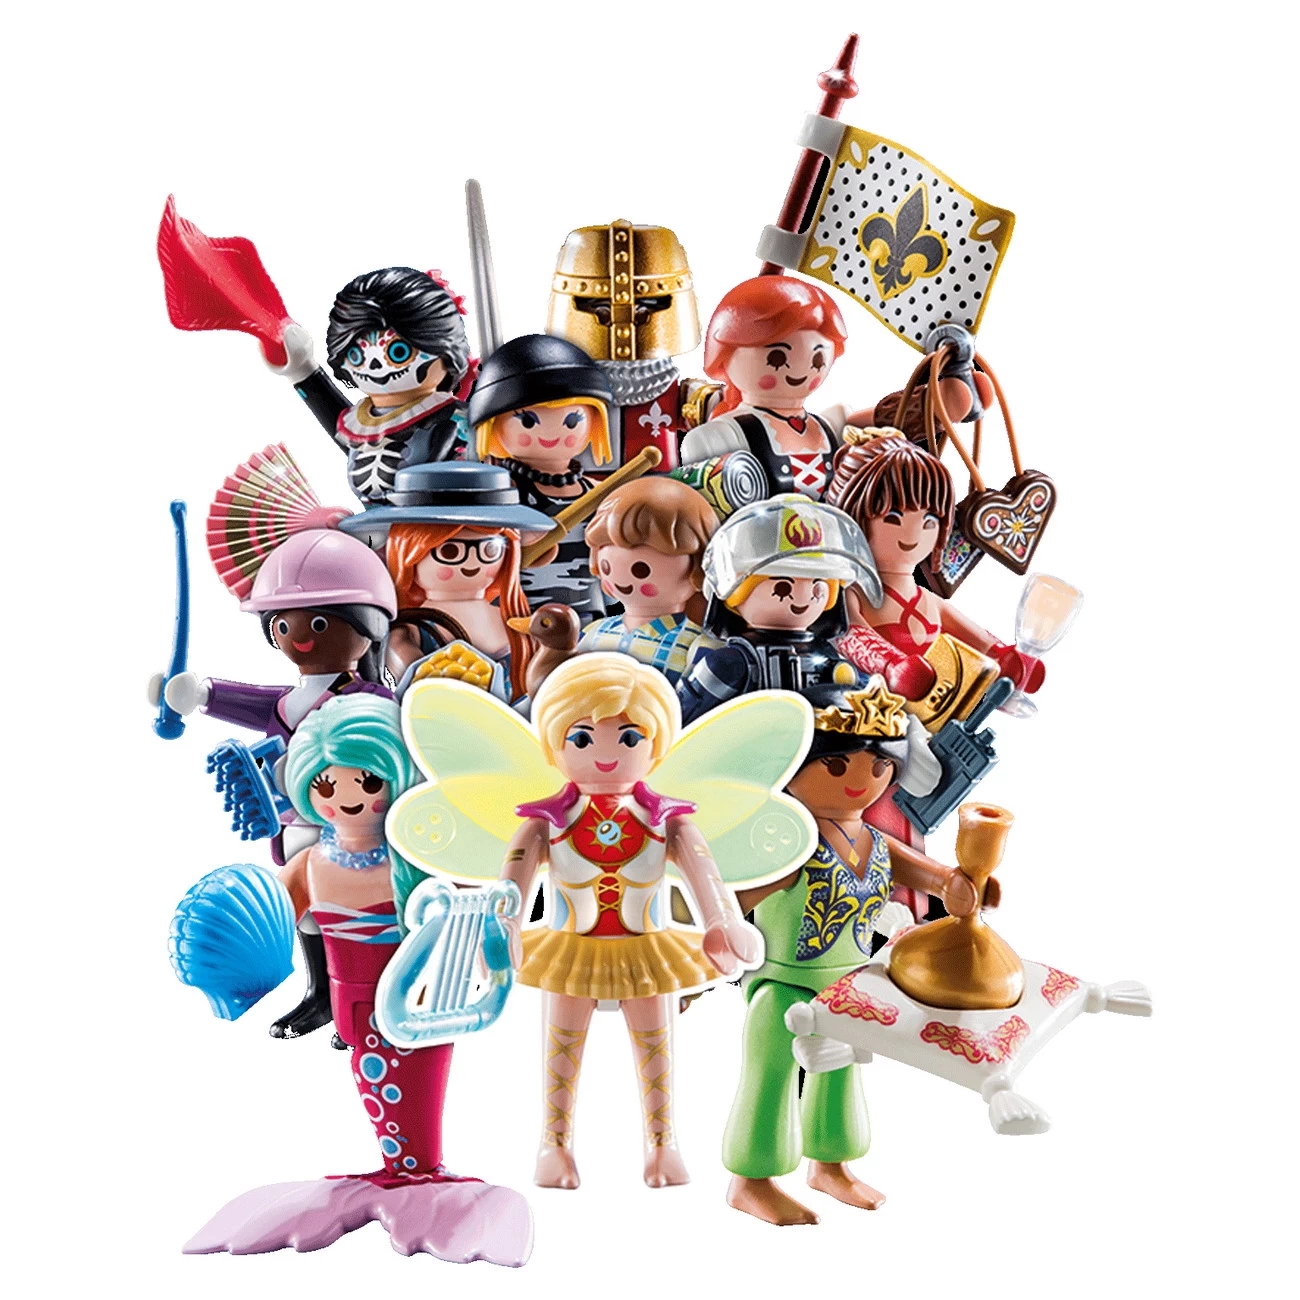 Playmobil Figures Girls Serie 20 (70149)